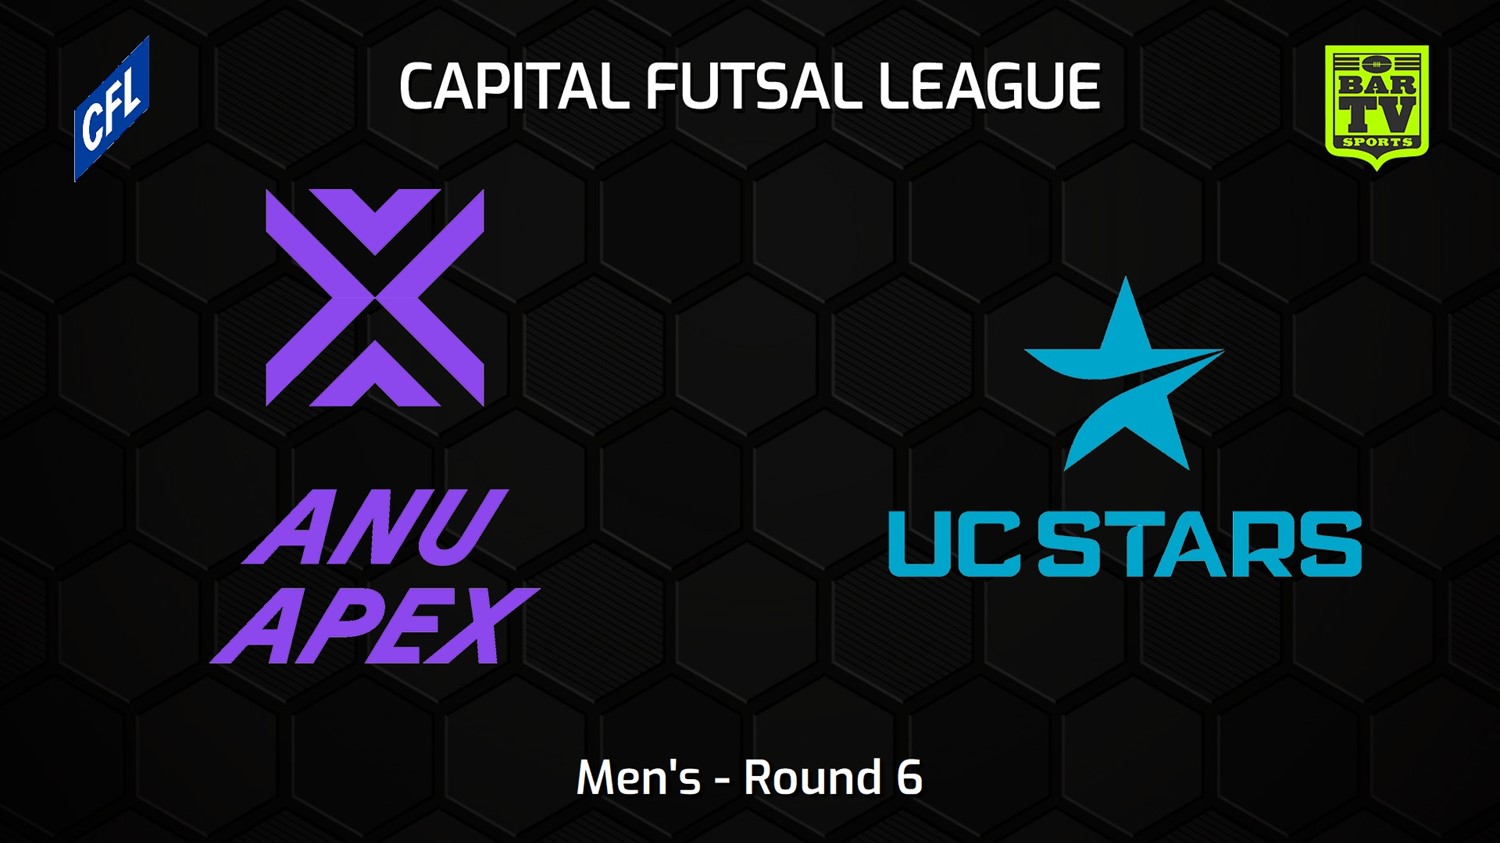 221202-Capital Football Futsal Round 6 - Men's - ANU Apex v UC Stars FC Minigame Slate Image